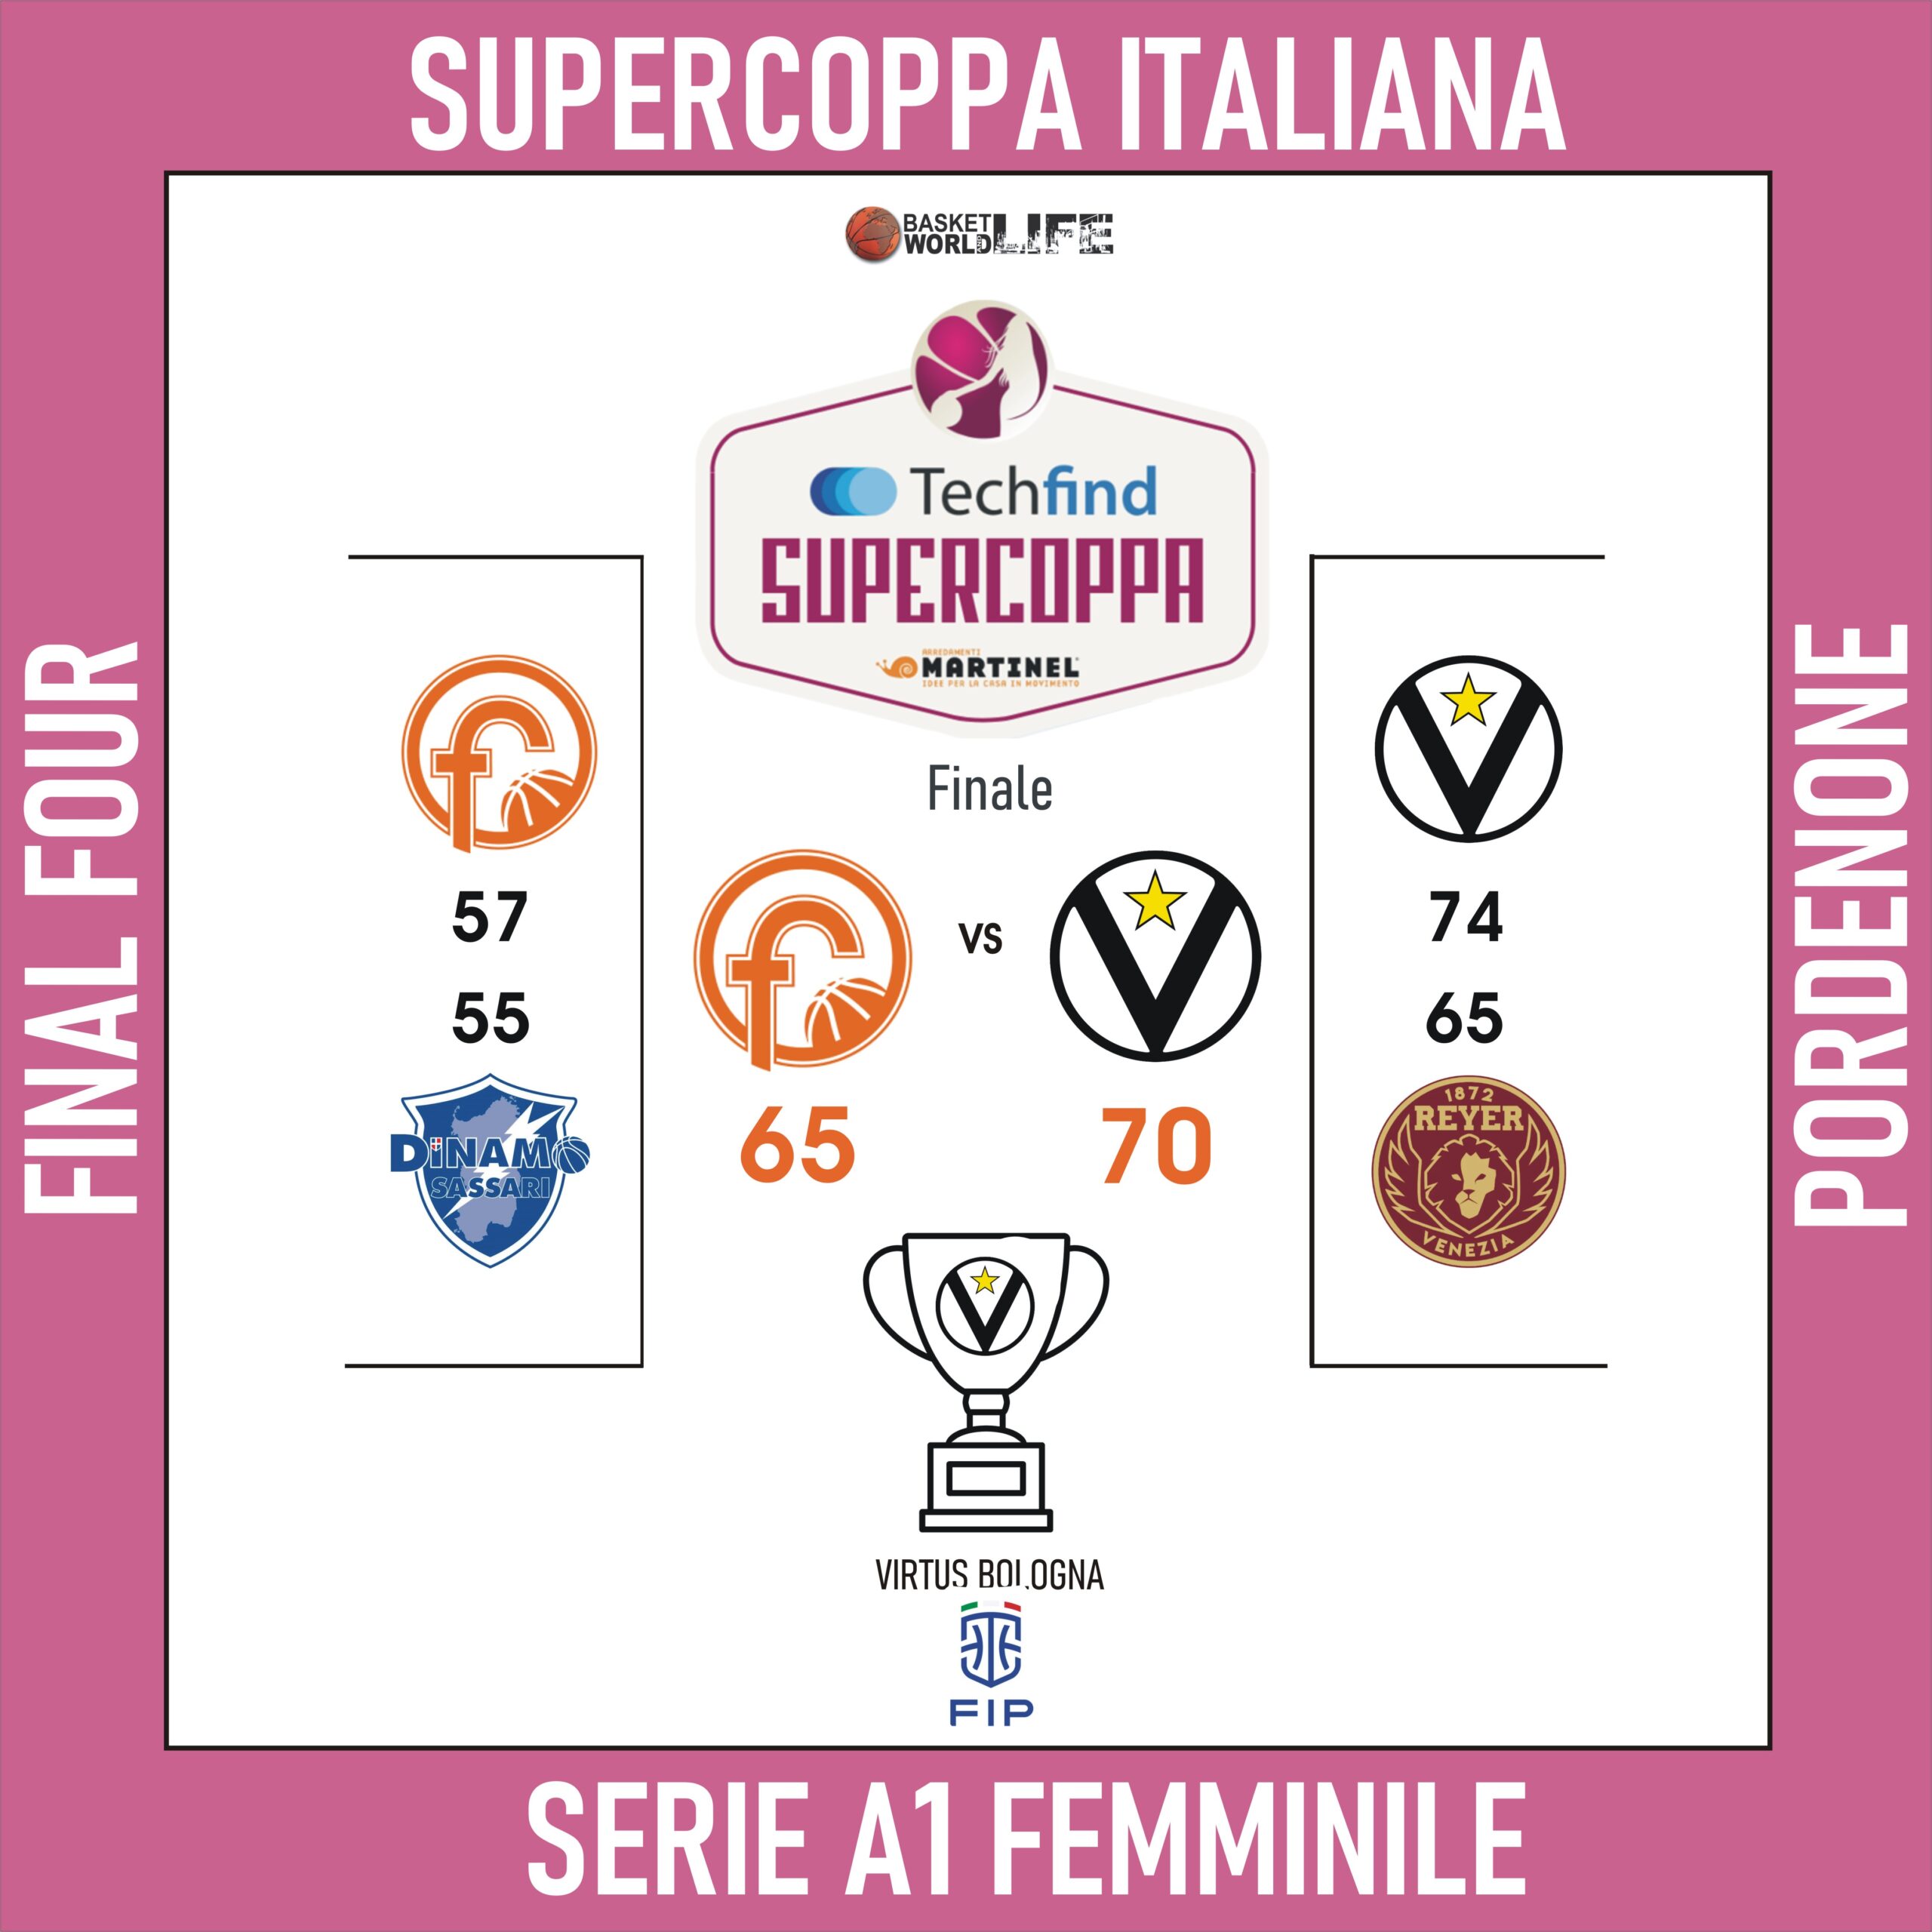 Supercoppa LBF A1 Femminile